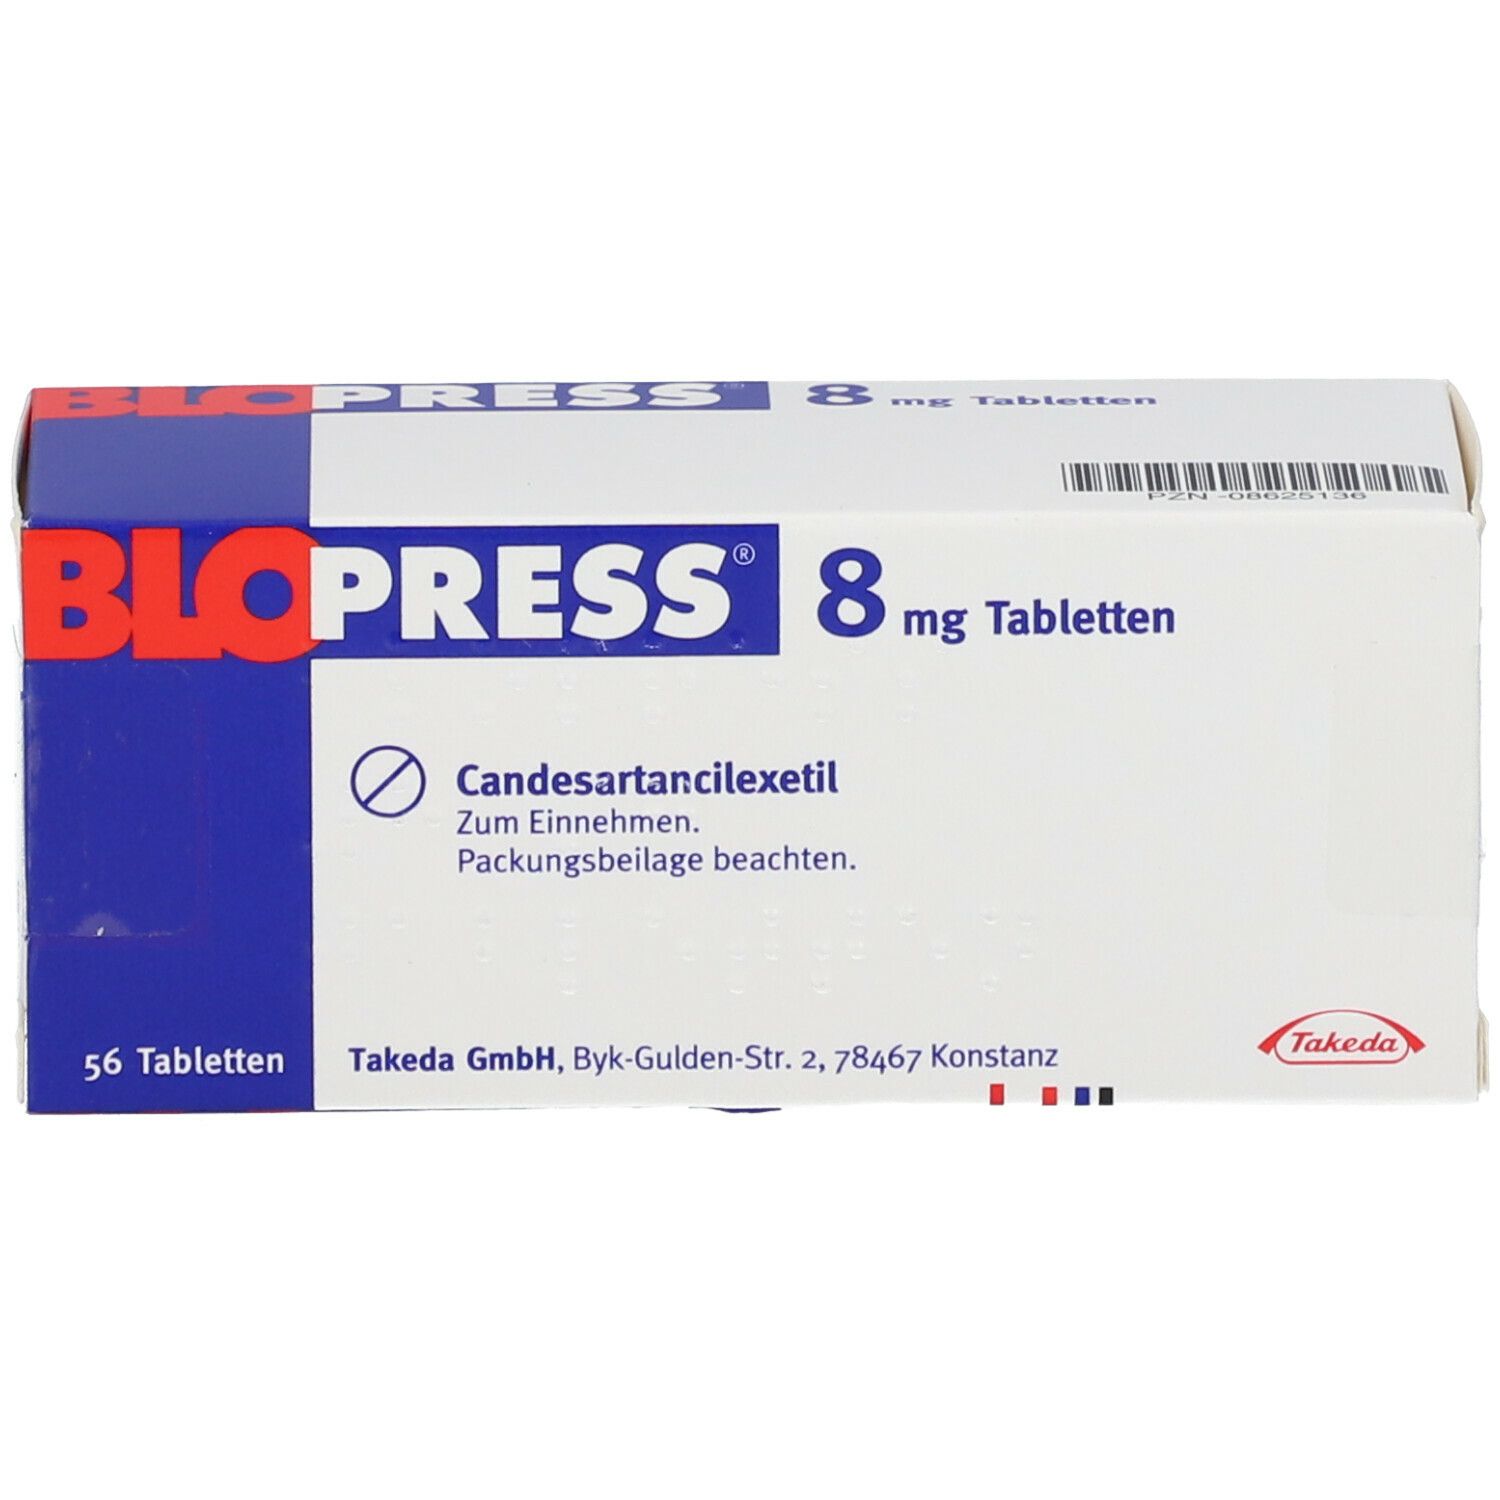 Blopress® 8 mg